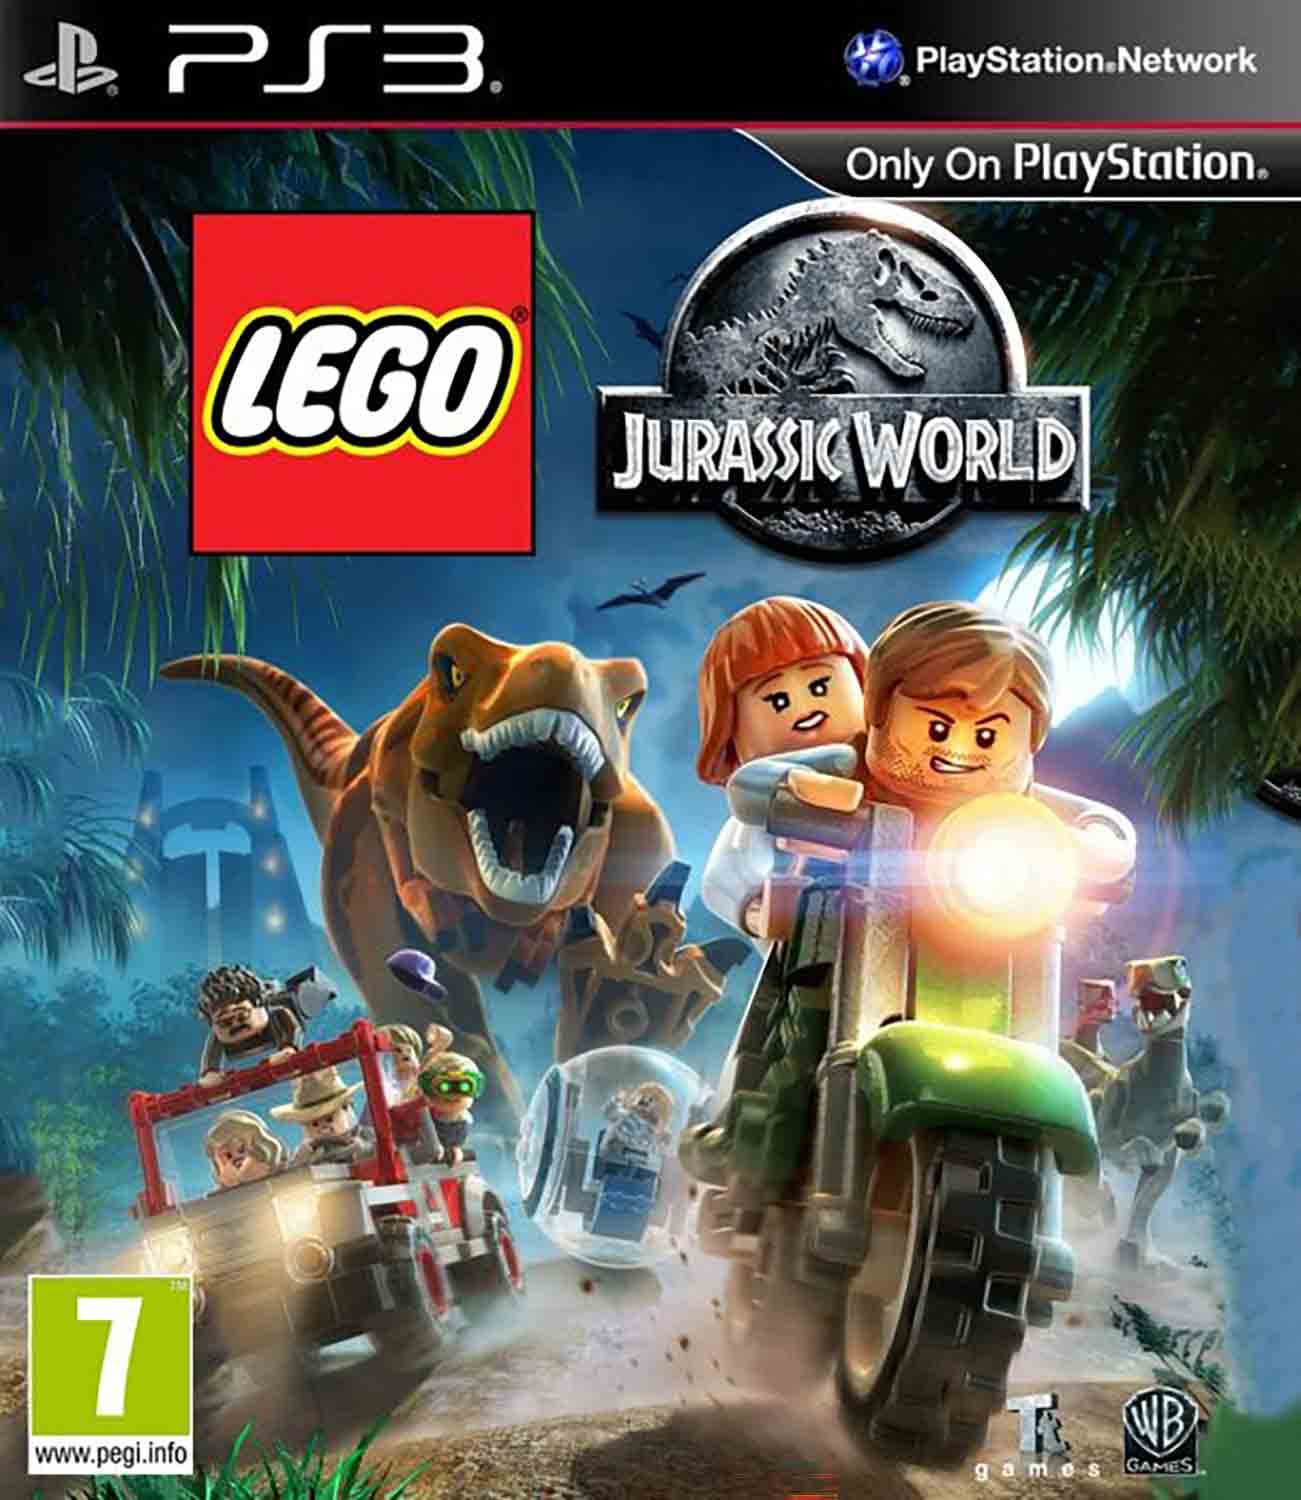 Hra Lego Jurassic World pro PS3 Playstation 3 konzole